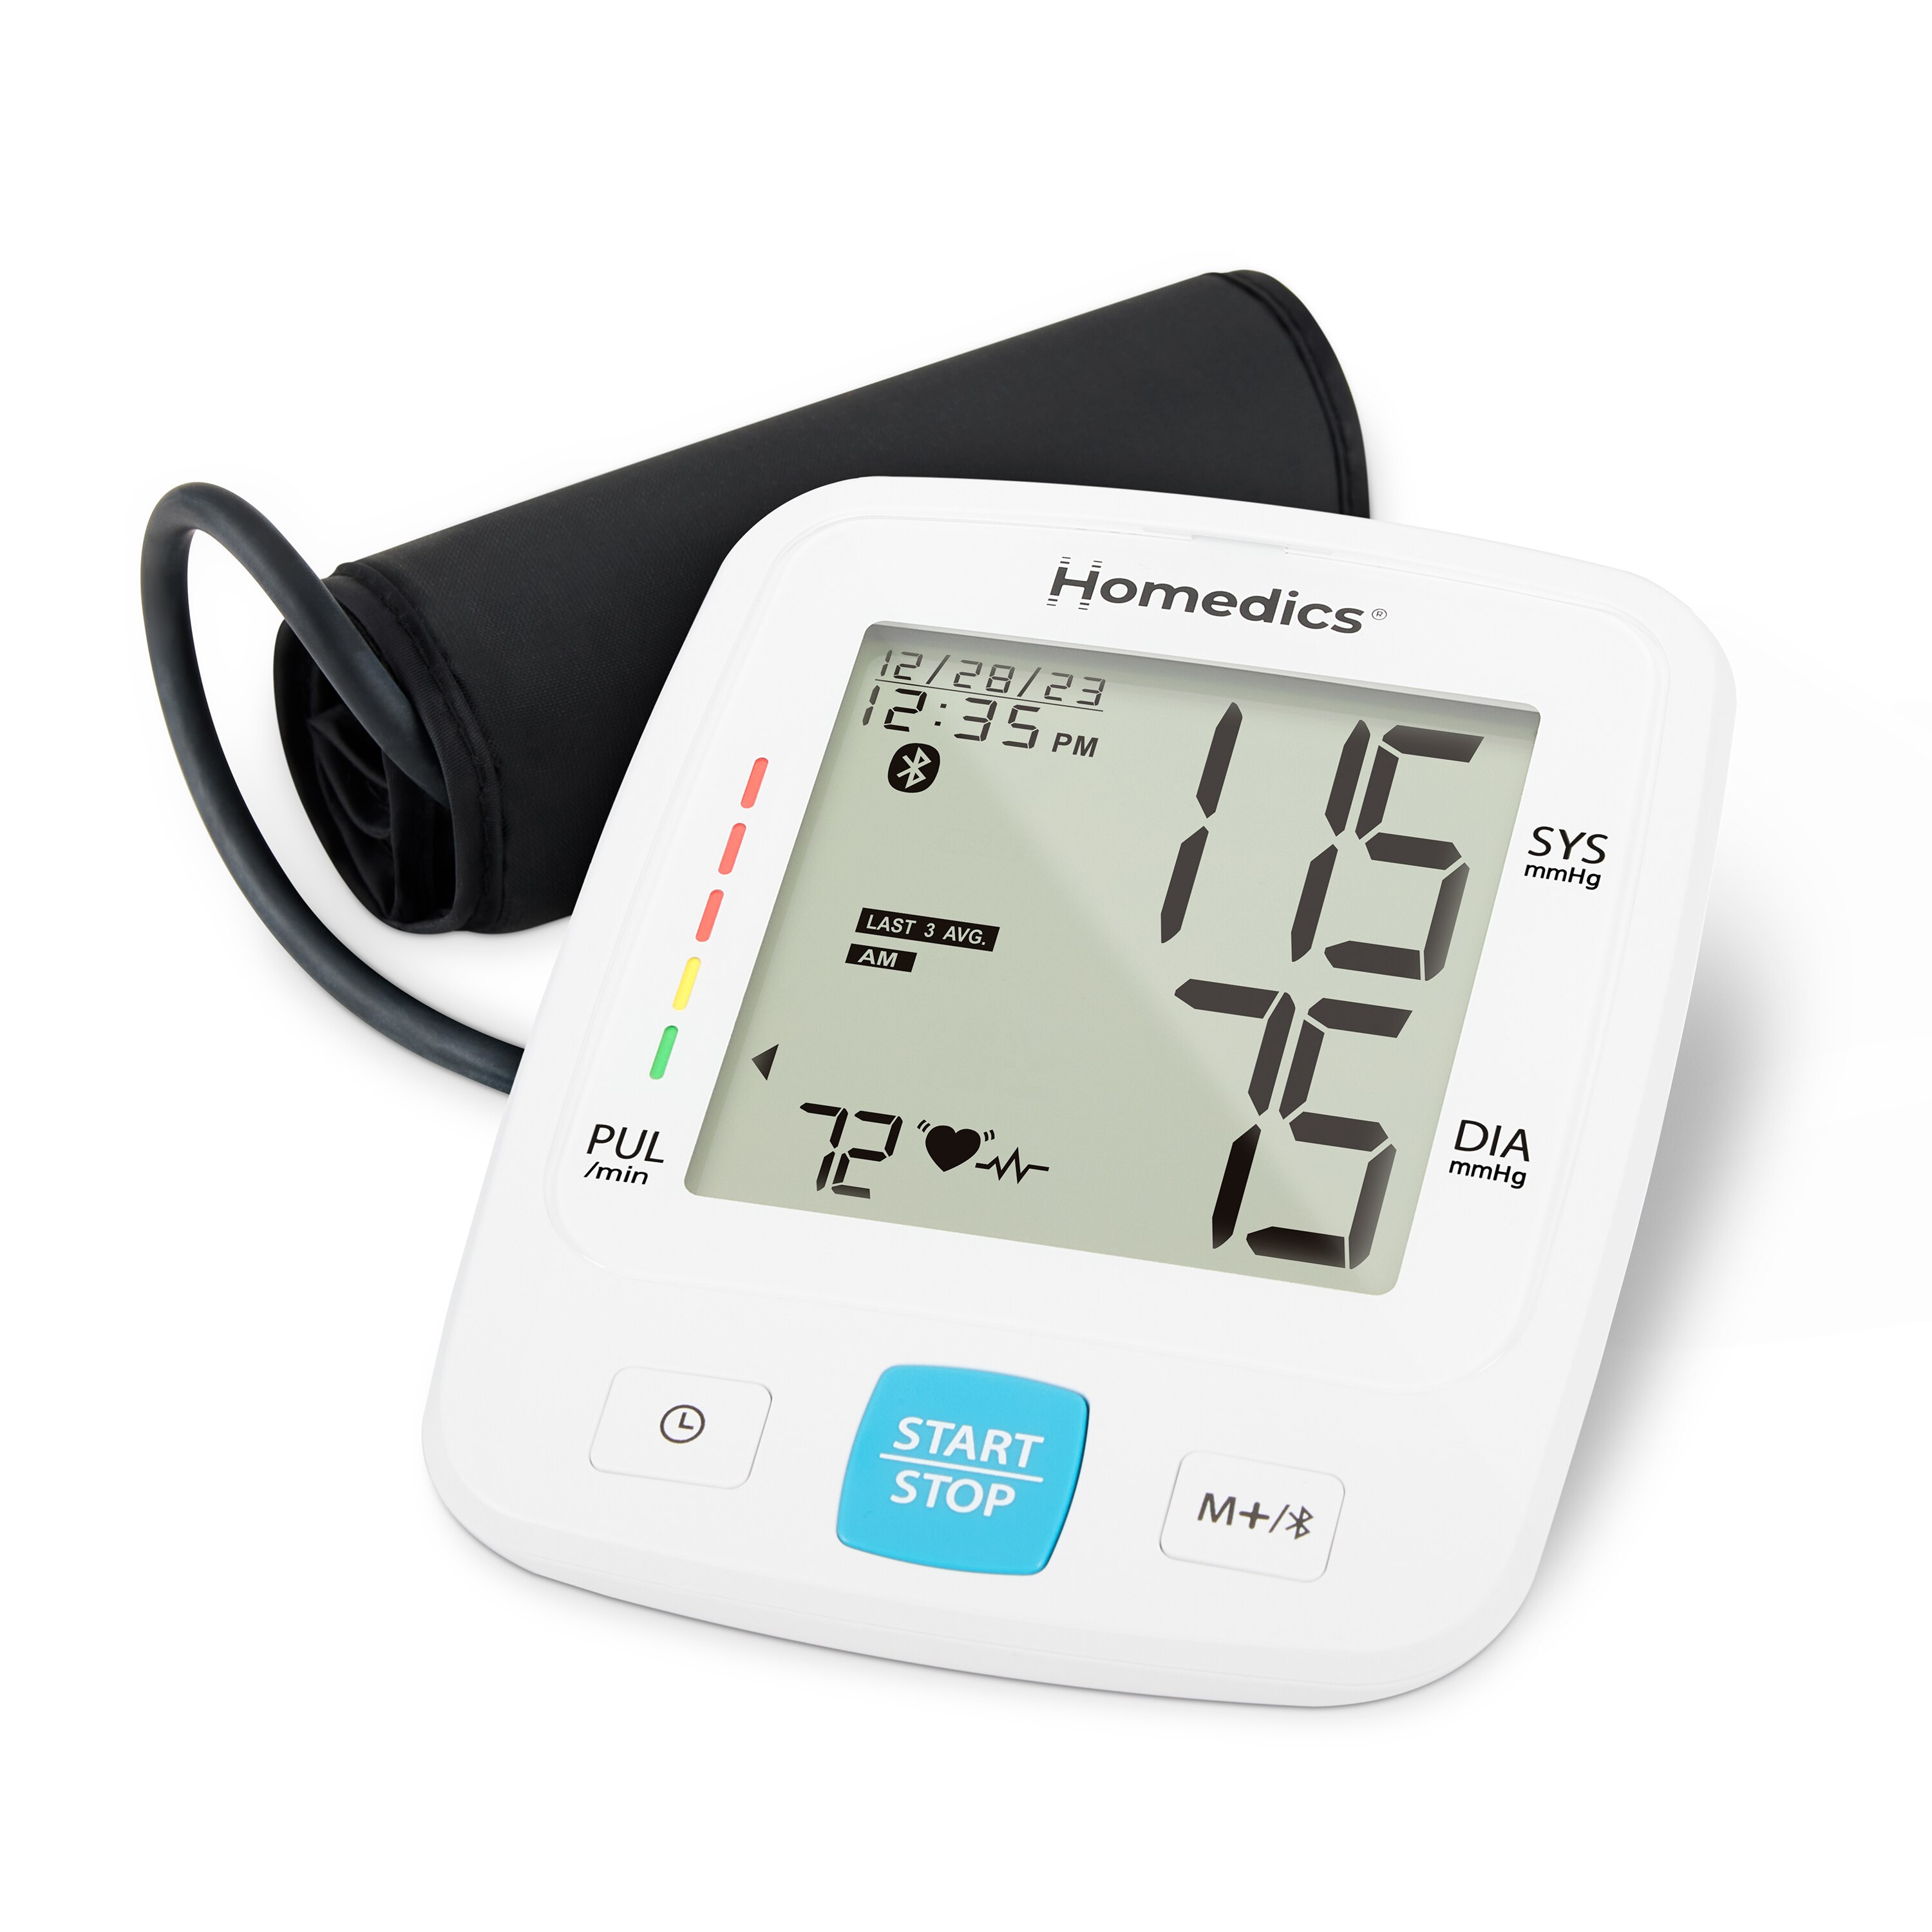 CVS Health Series 600 Blood Pressure Monitor - Brand New in Box - READ